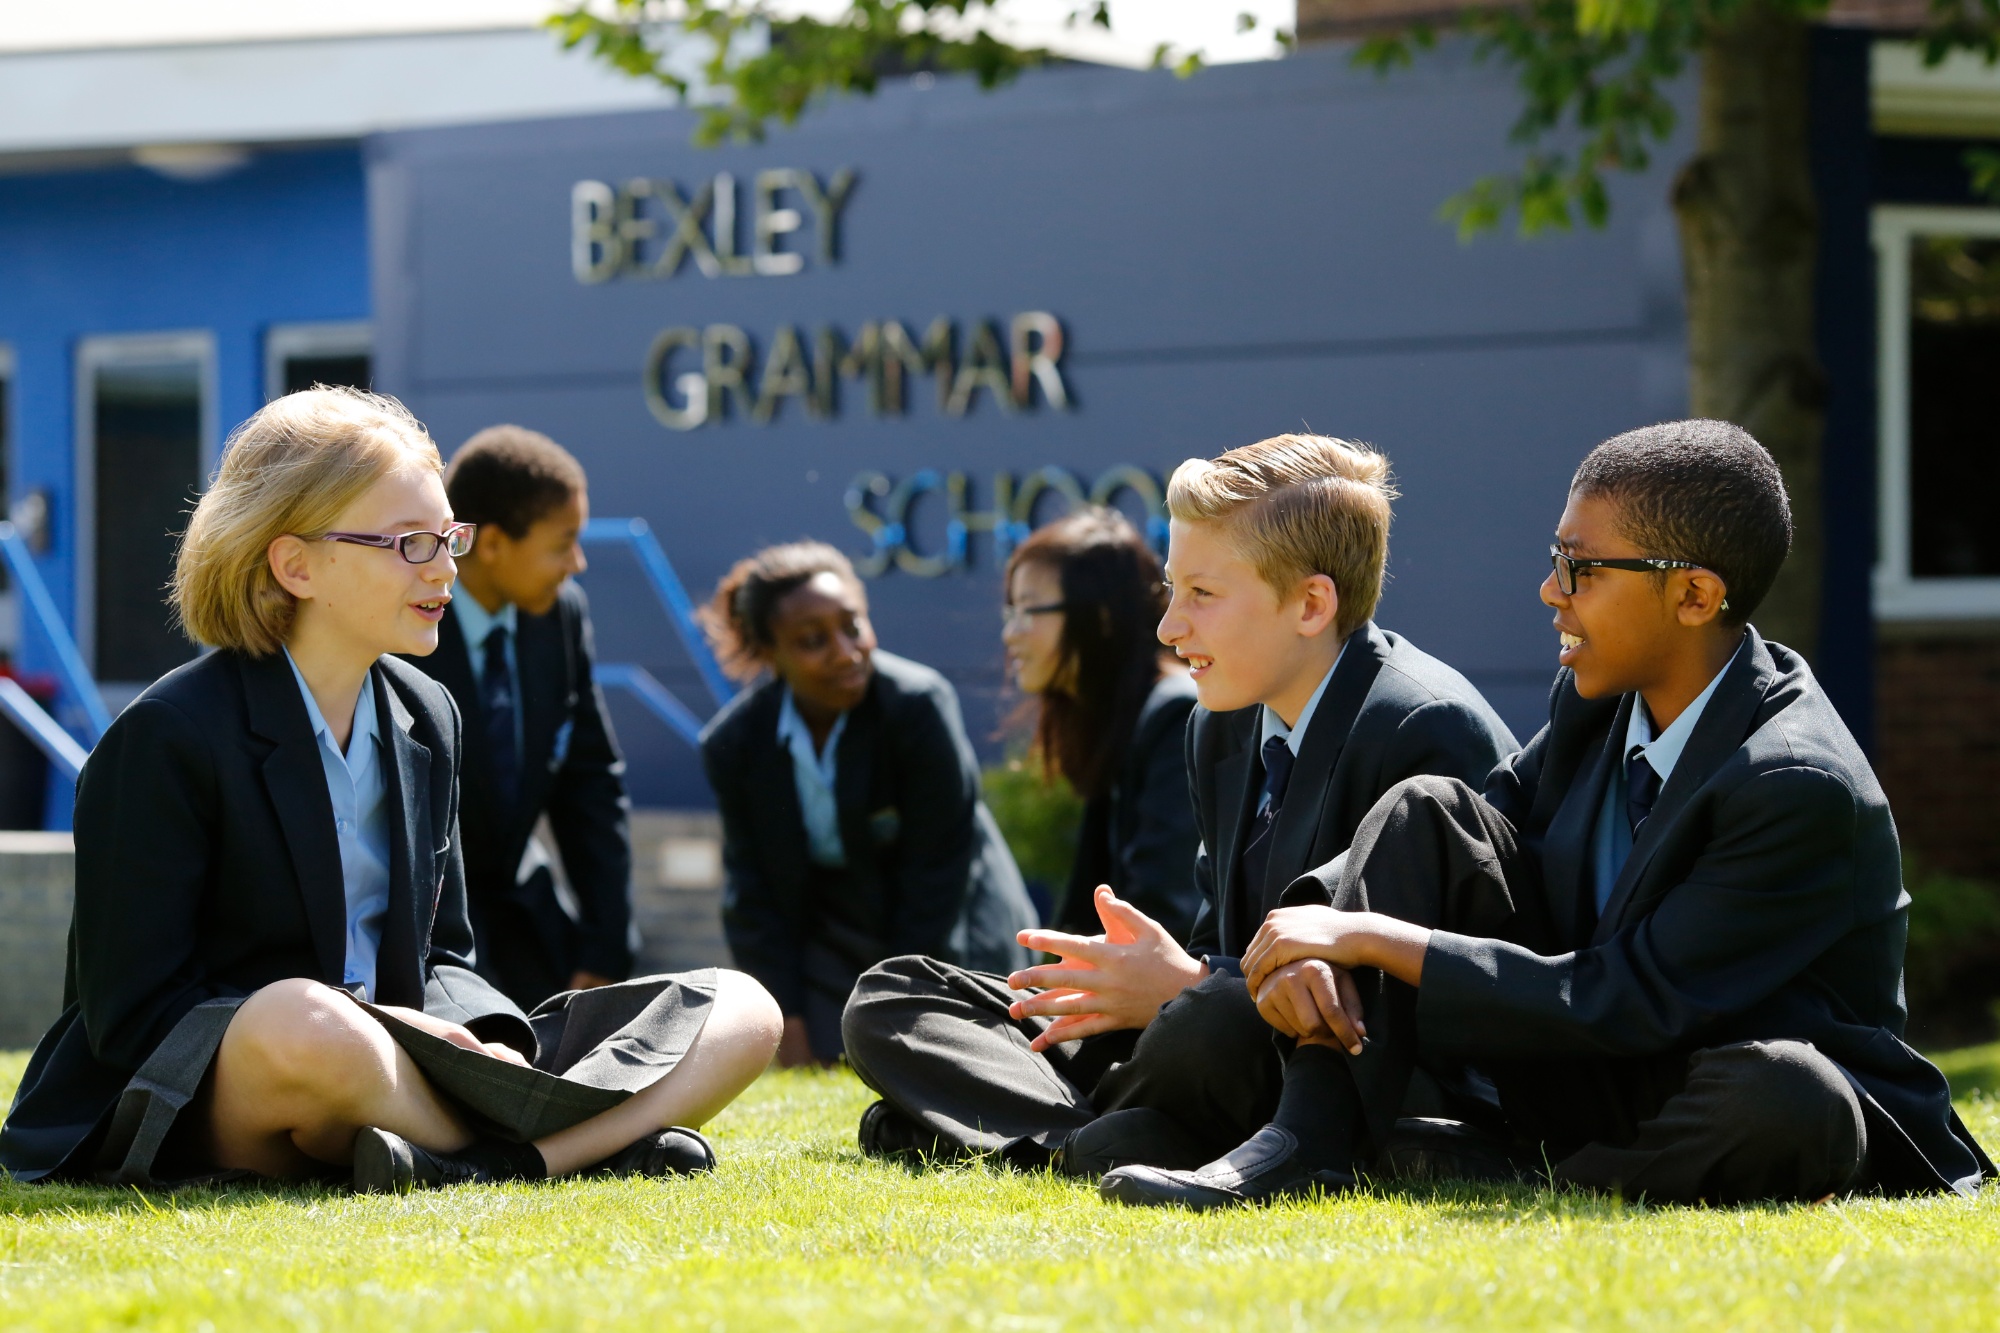 bexley grammar school virtual tour